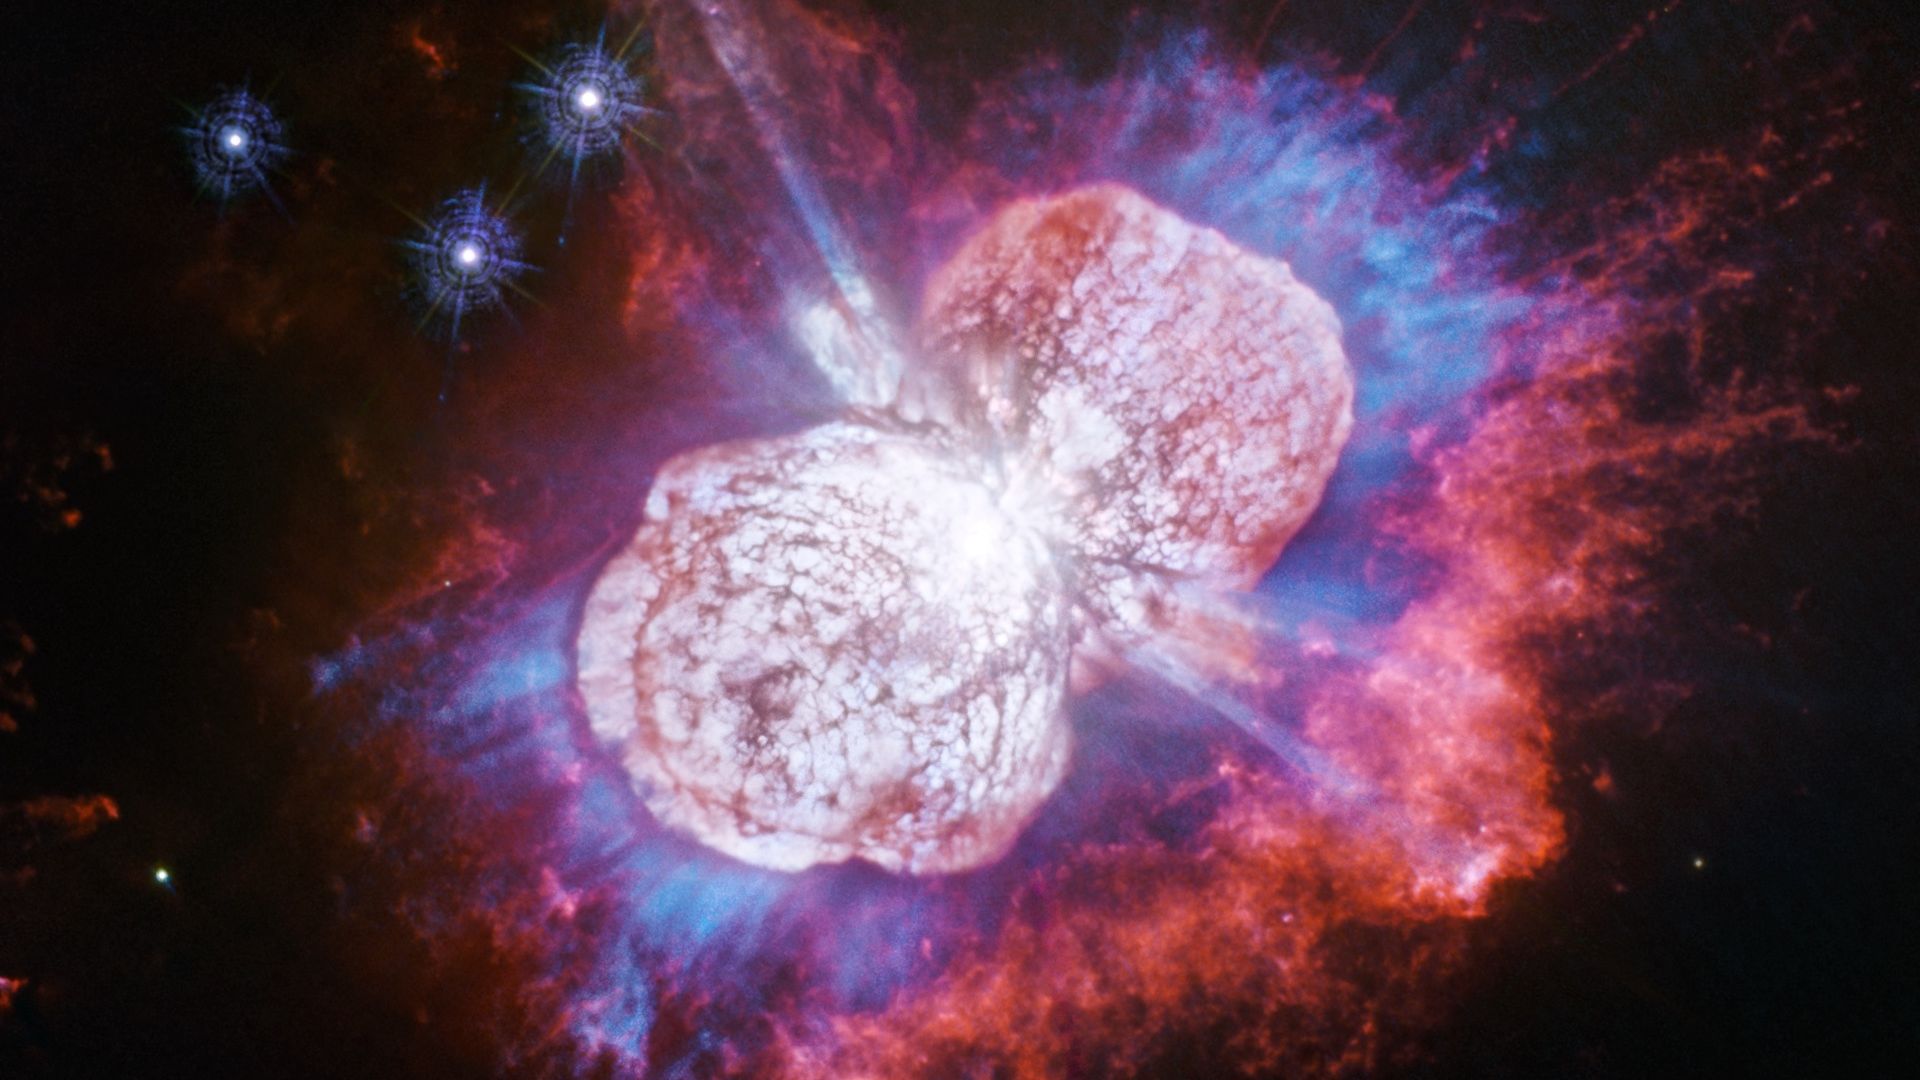 Eta Carinae seen by the Hubble Space Telescope